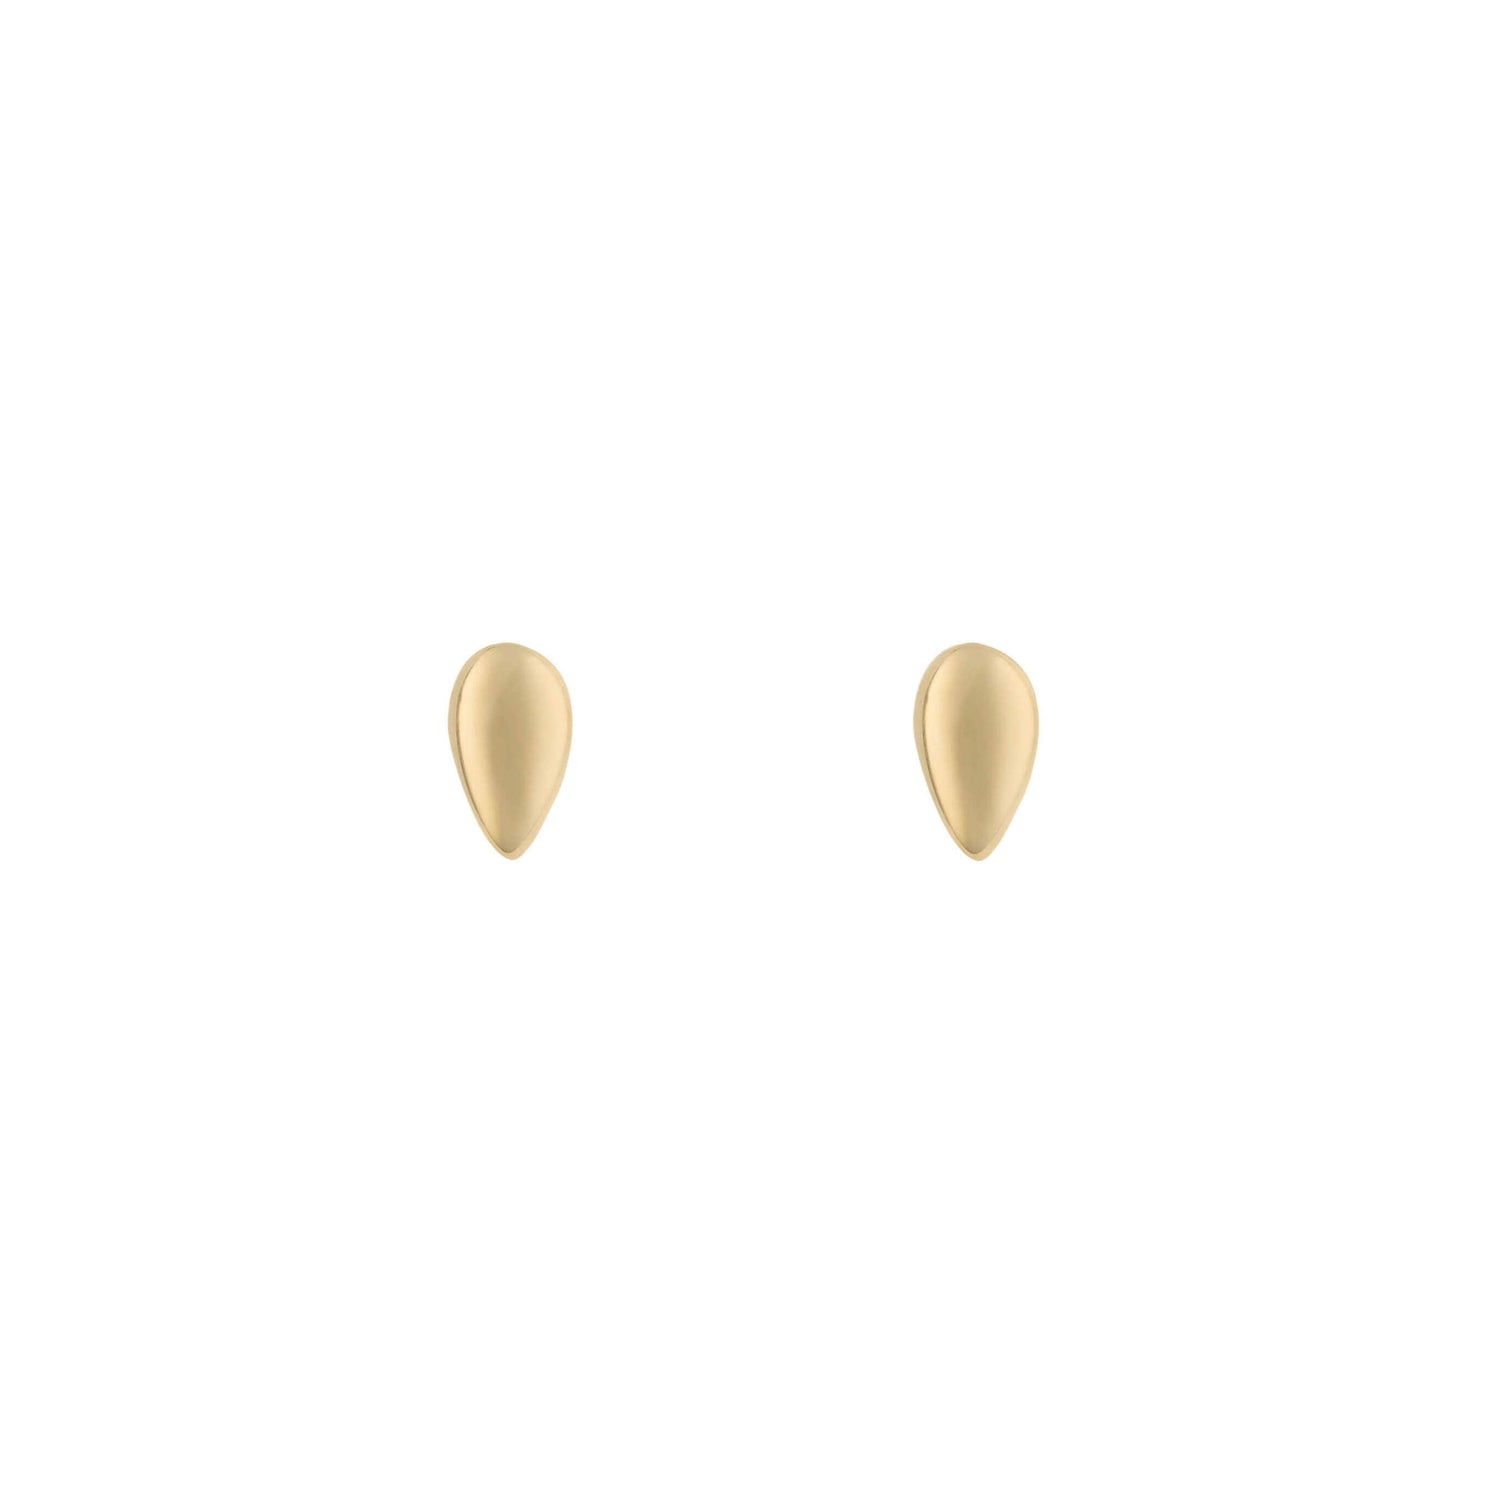 Plain Teardrop Stud Earrings in 9ct Yellow Gold - Robert Anthony Jewellers, Edinburgh